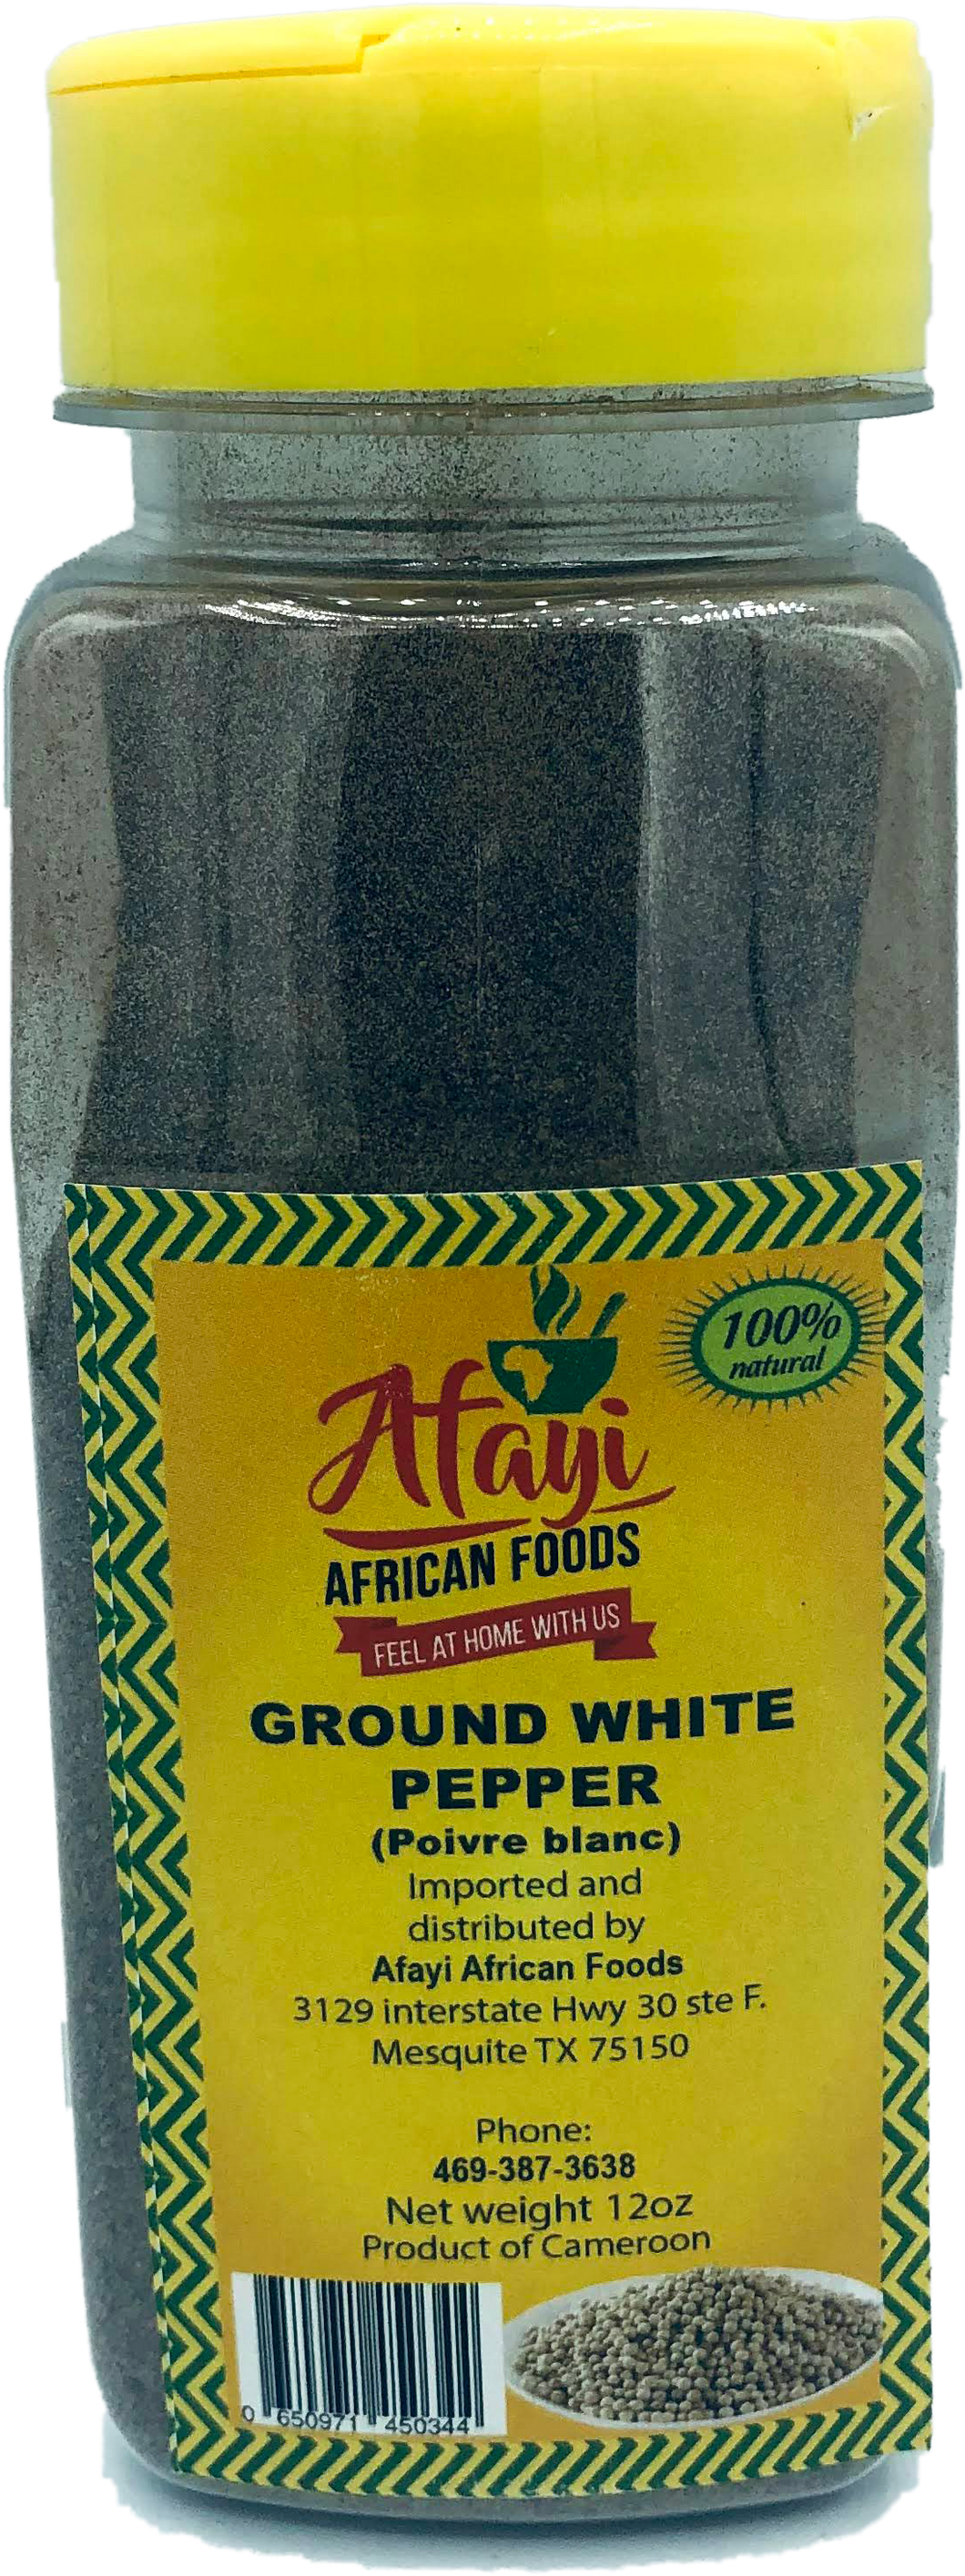 Afayi Ground White Pepper